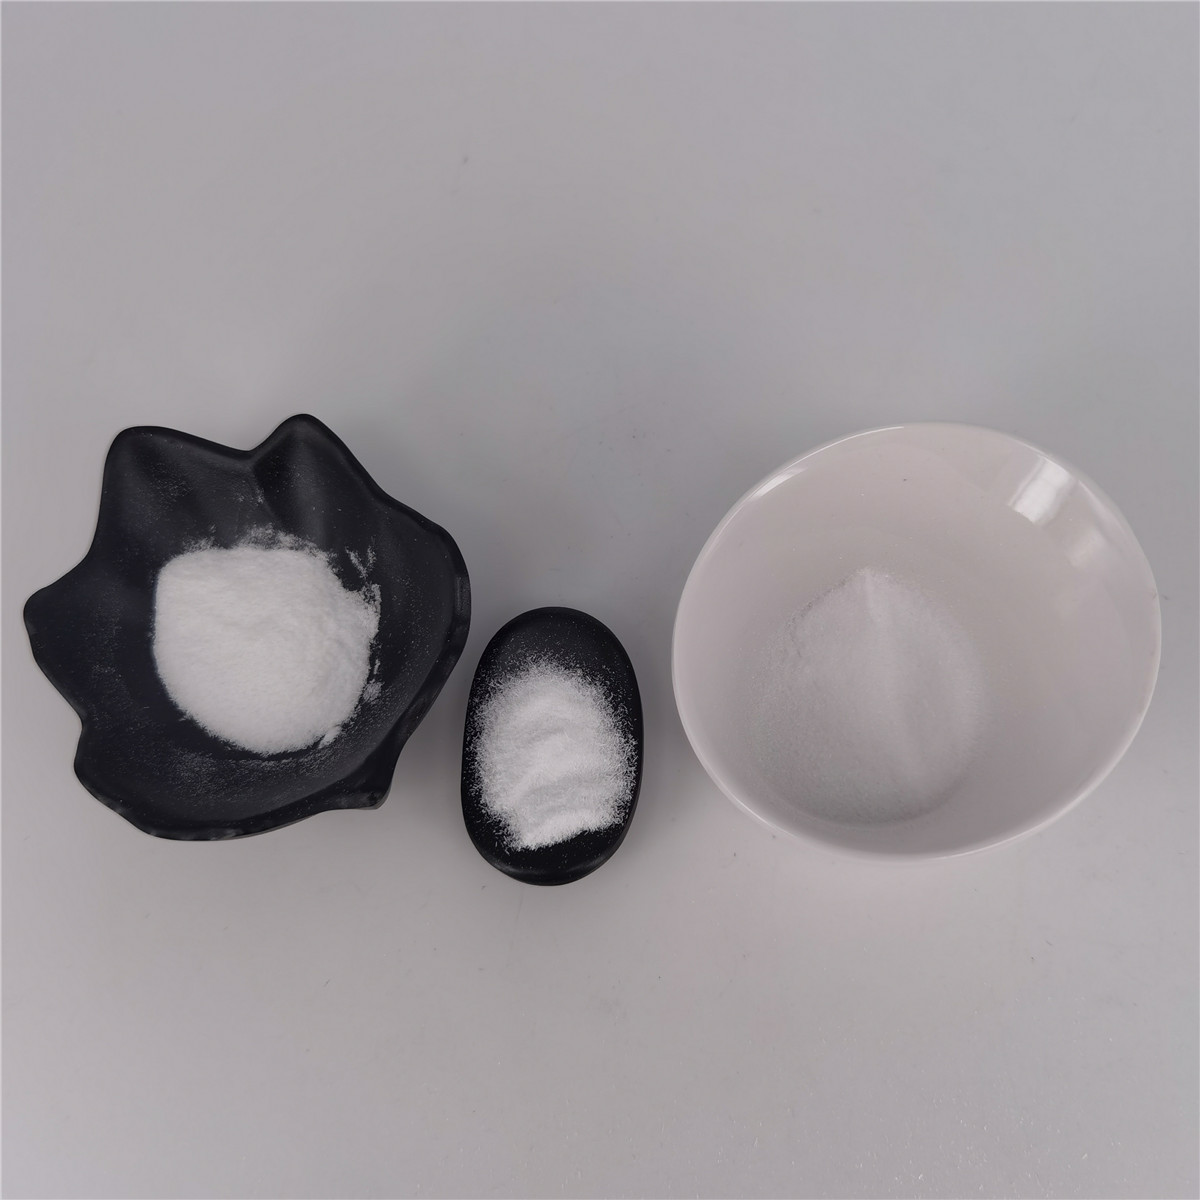 Best Whitening Materials White Powder Beta Arbutin CAS 497 76 7 wholesale